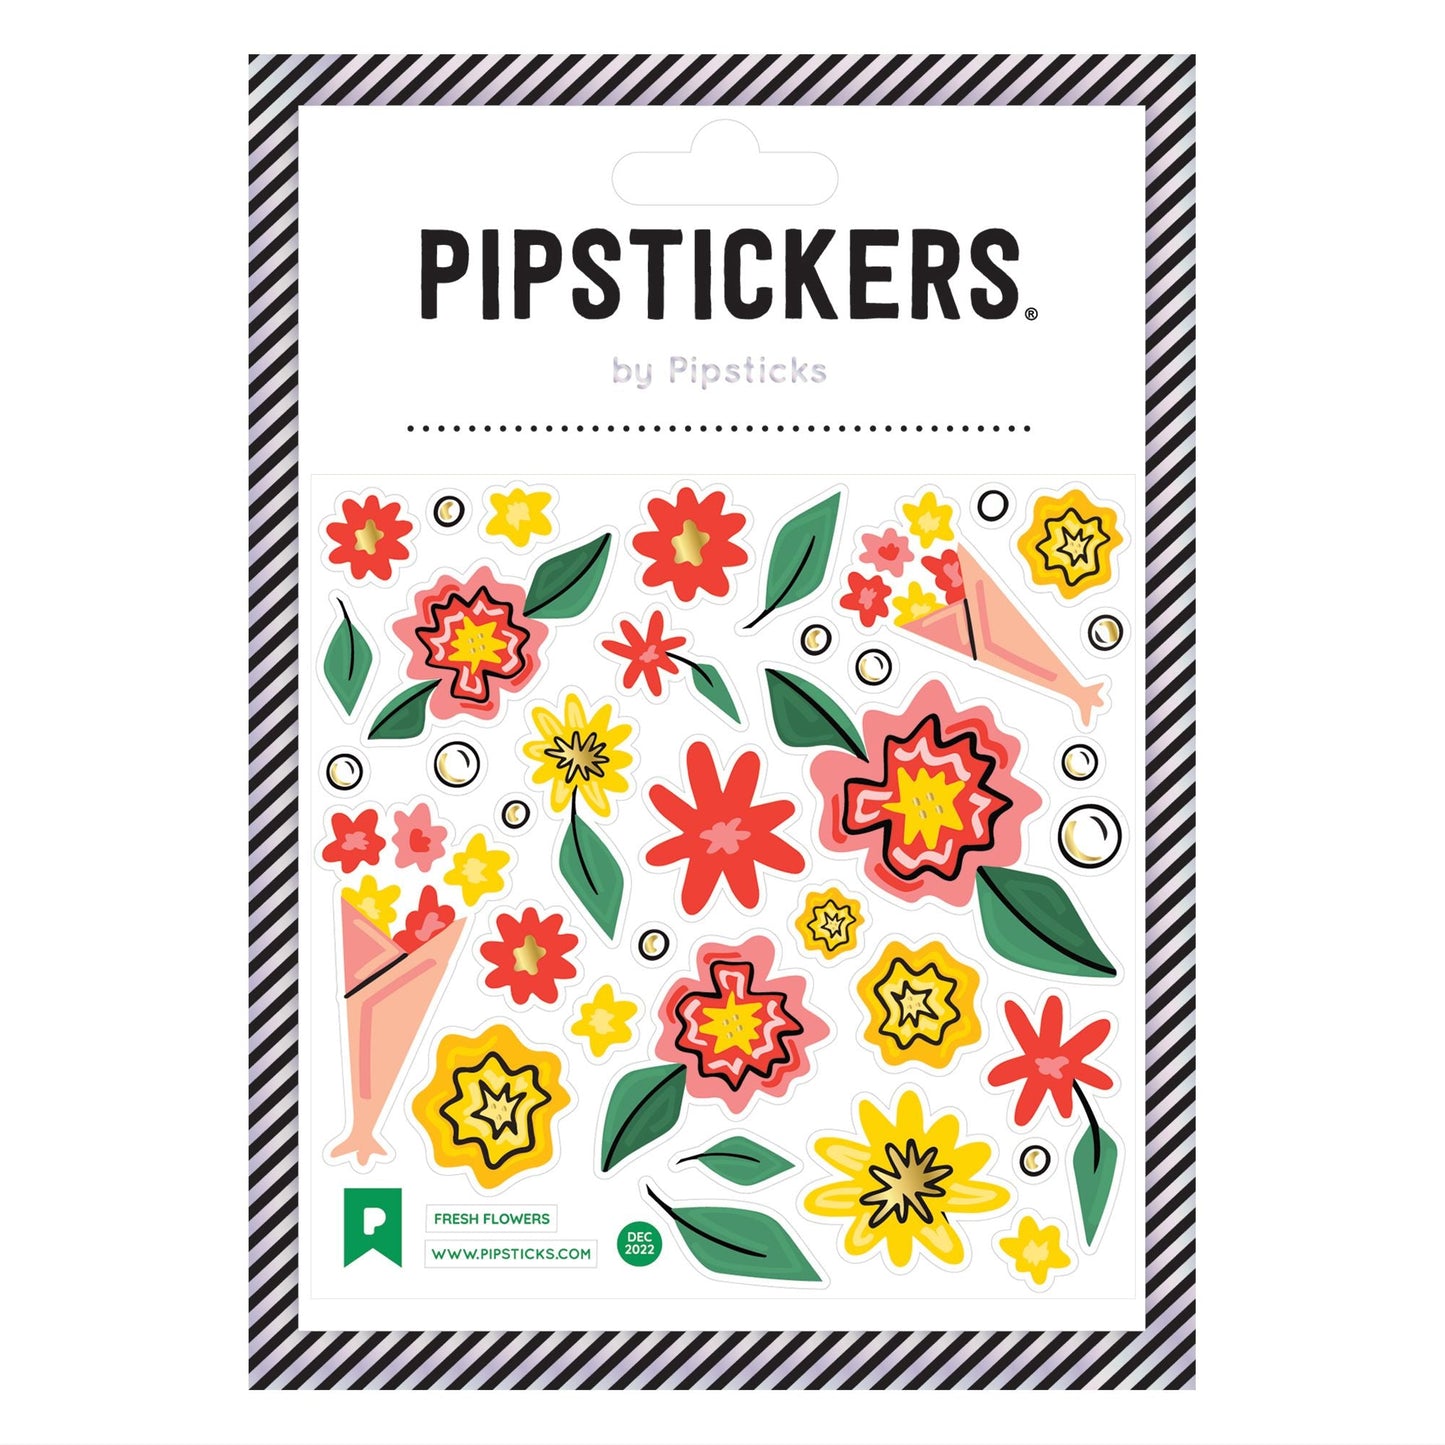 Fresh Flowers PipStickers